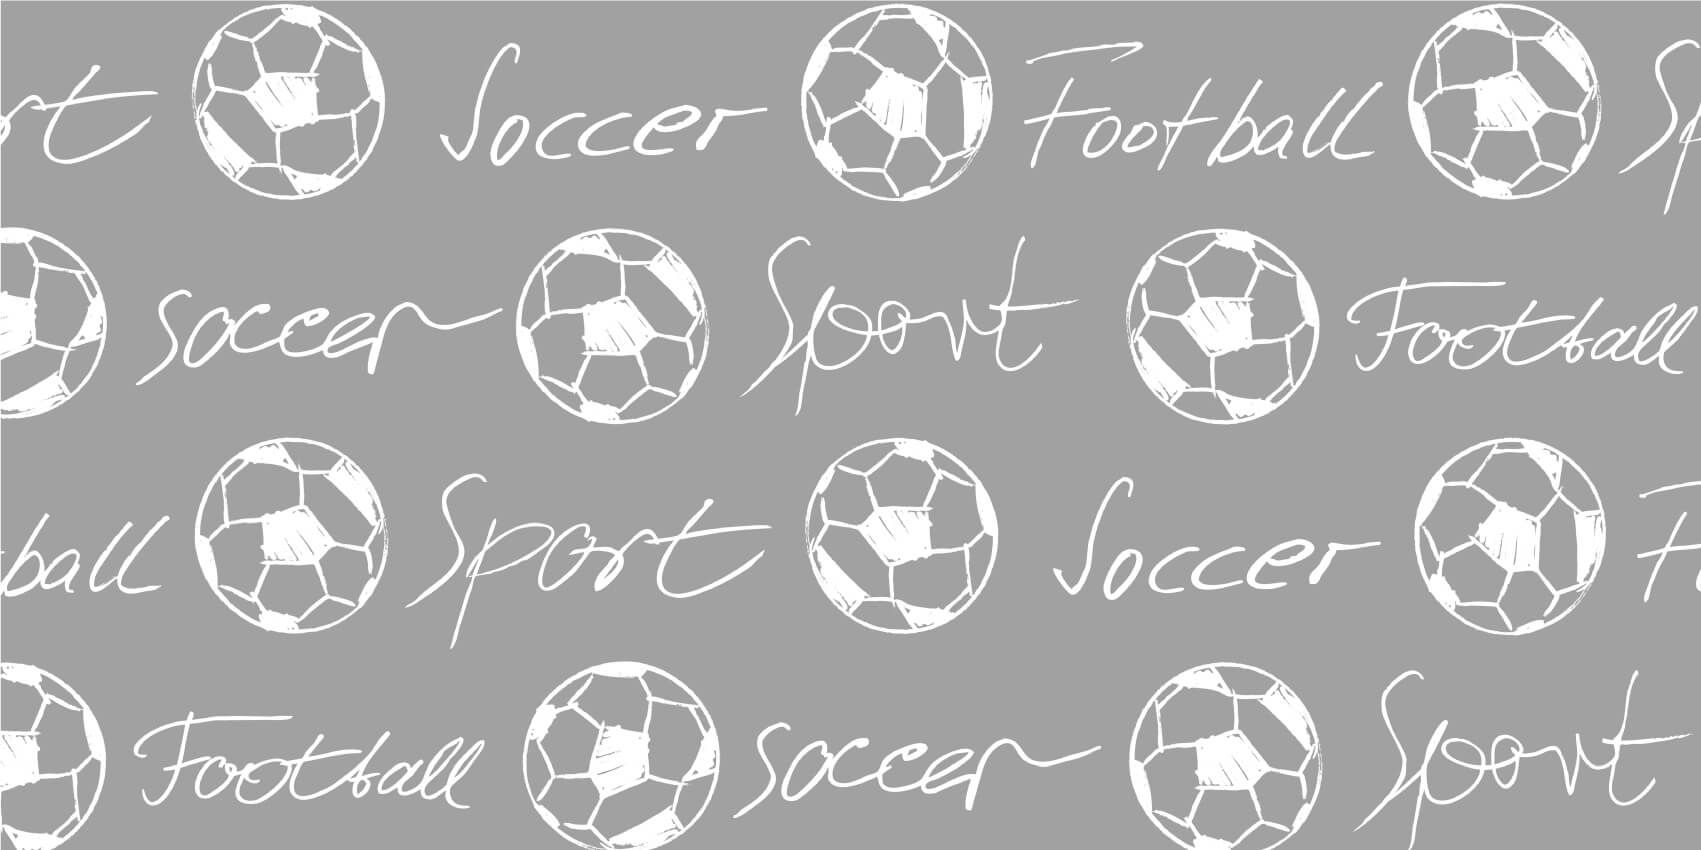 Papier peint de football - Ballons de football et texte - Chambre d'enfants